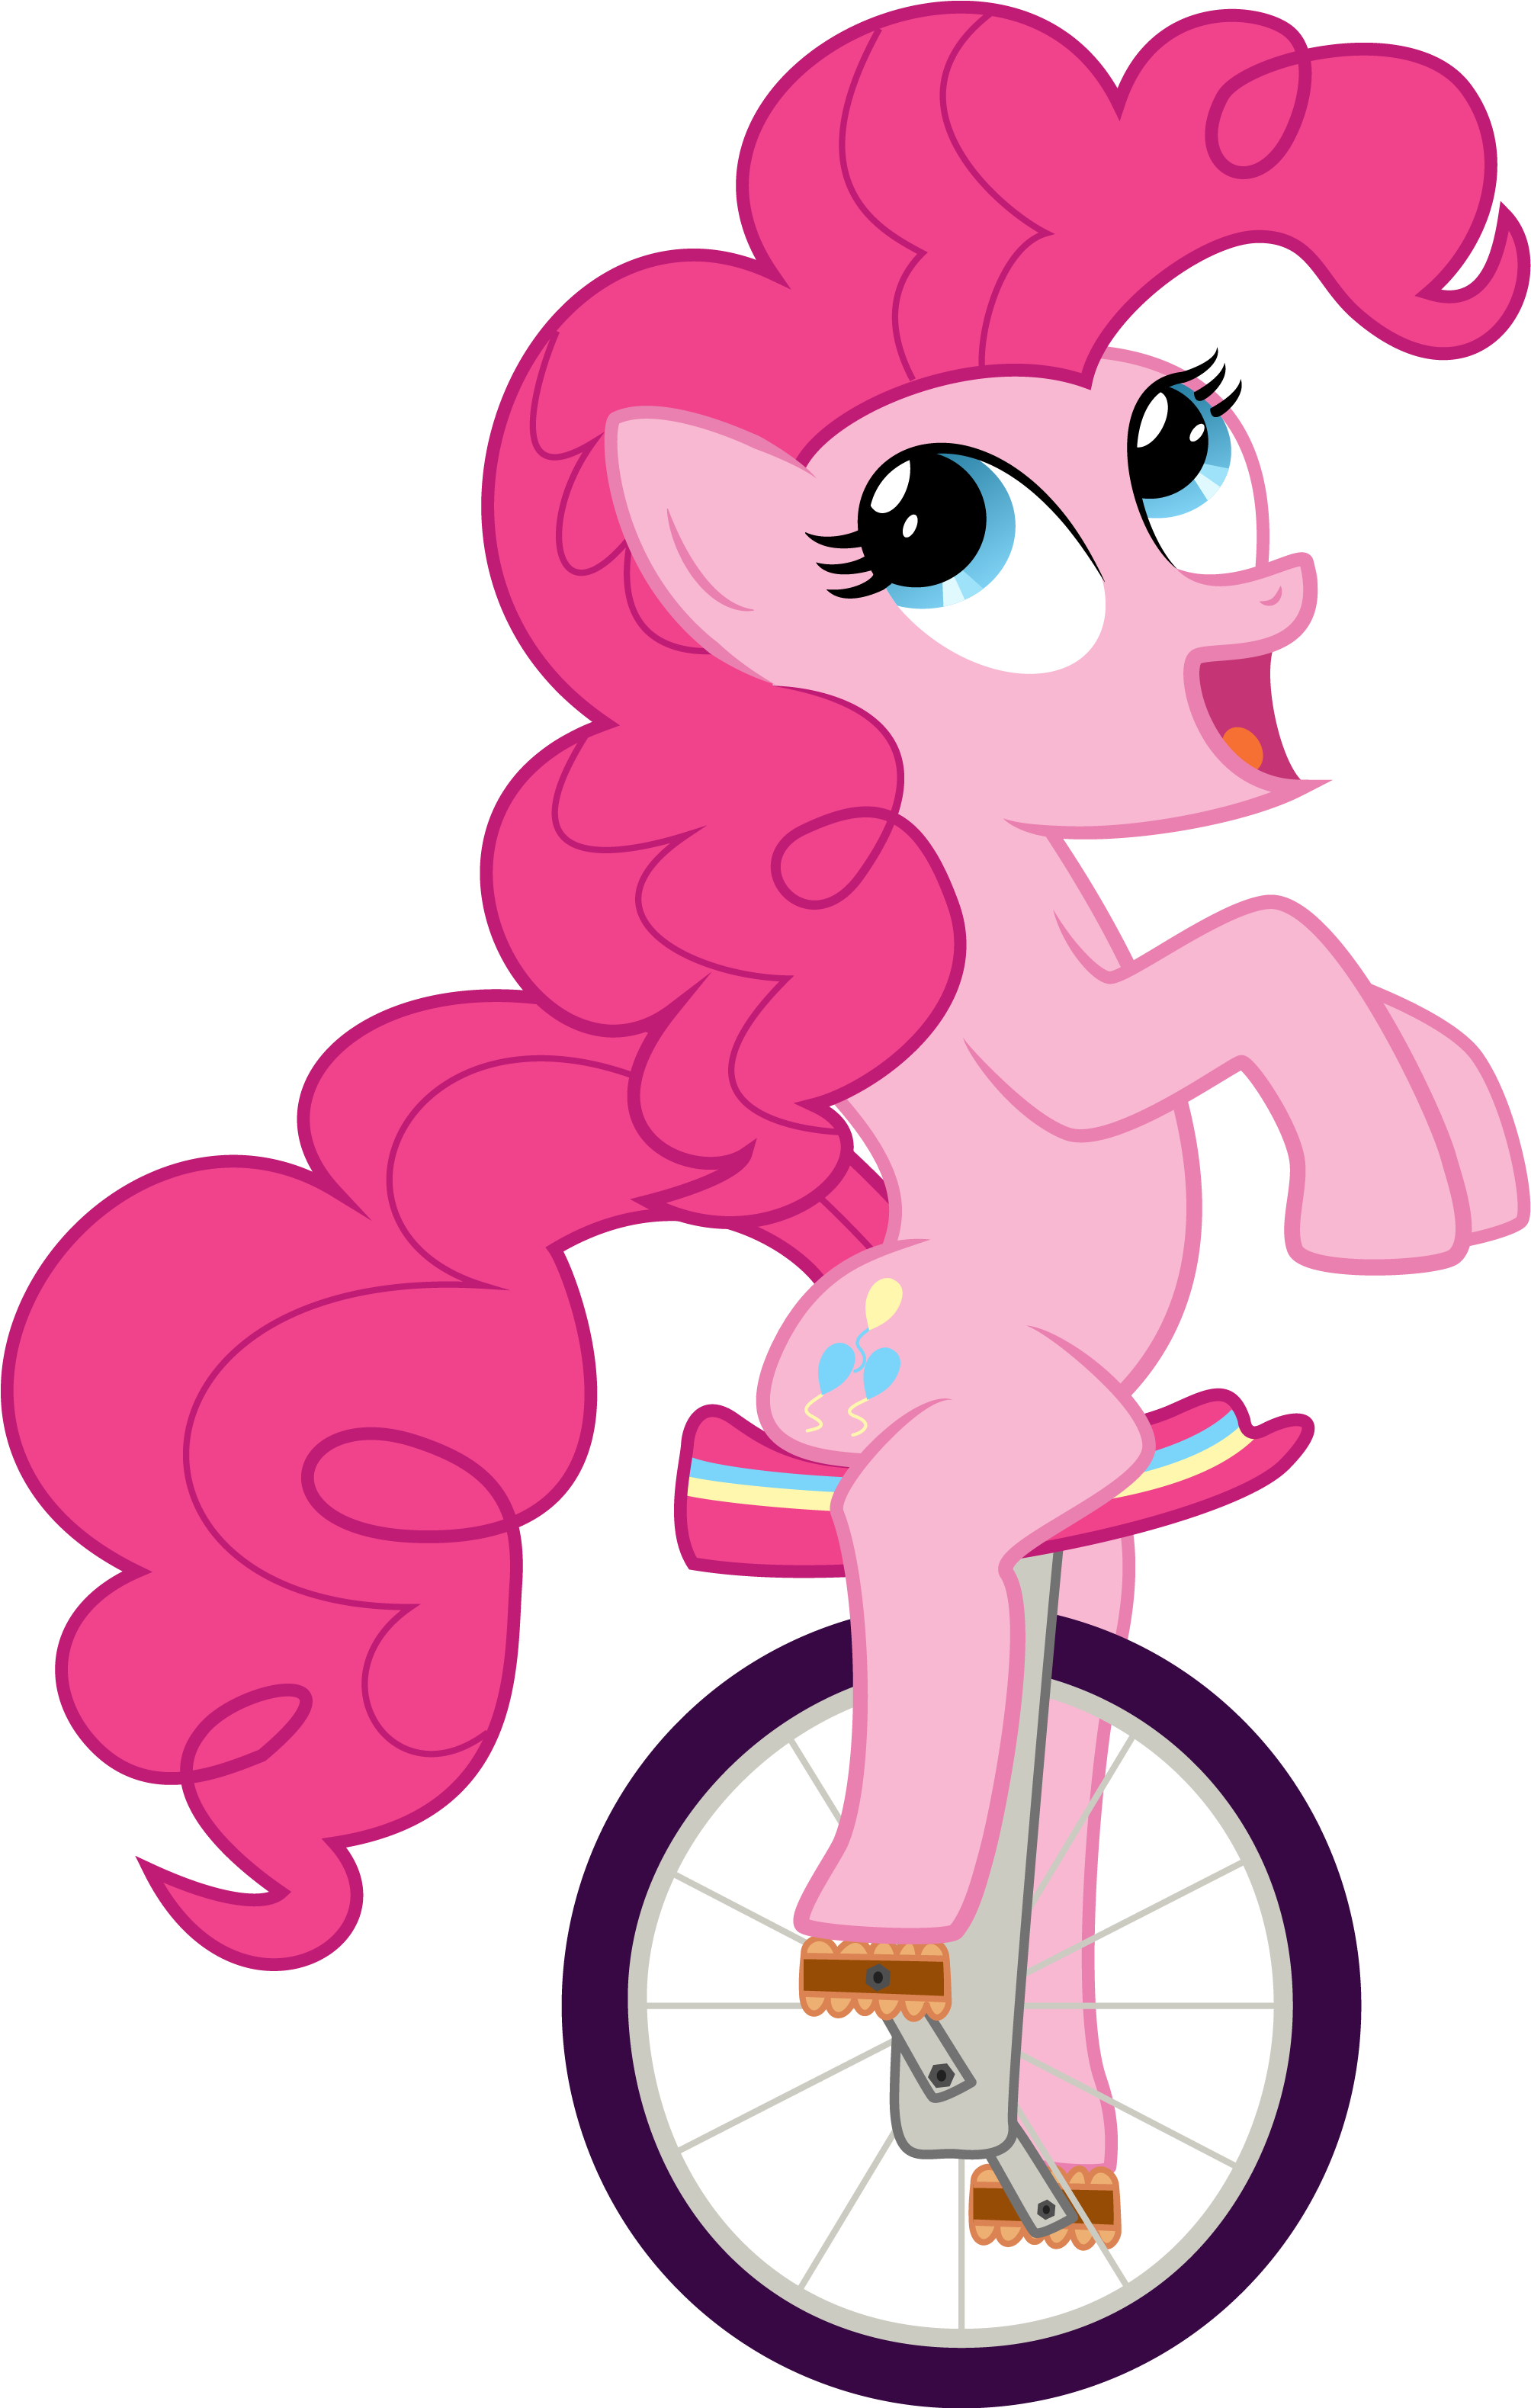 Cartoon A Cartoon Of A Pony Riding A Unicycle